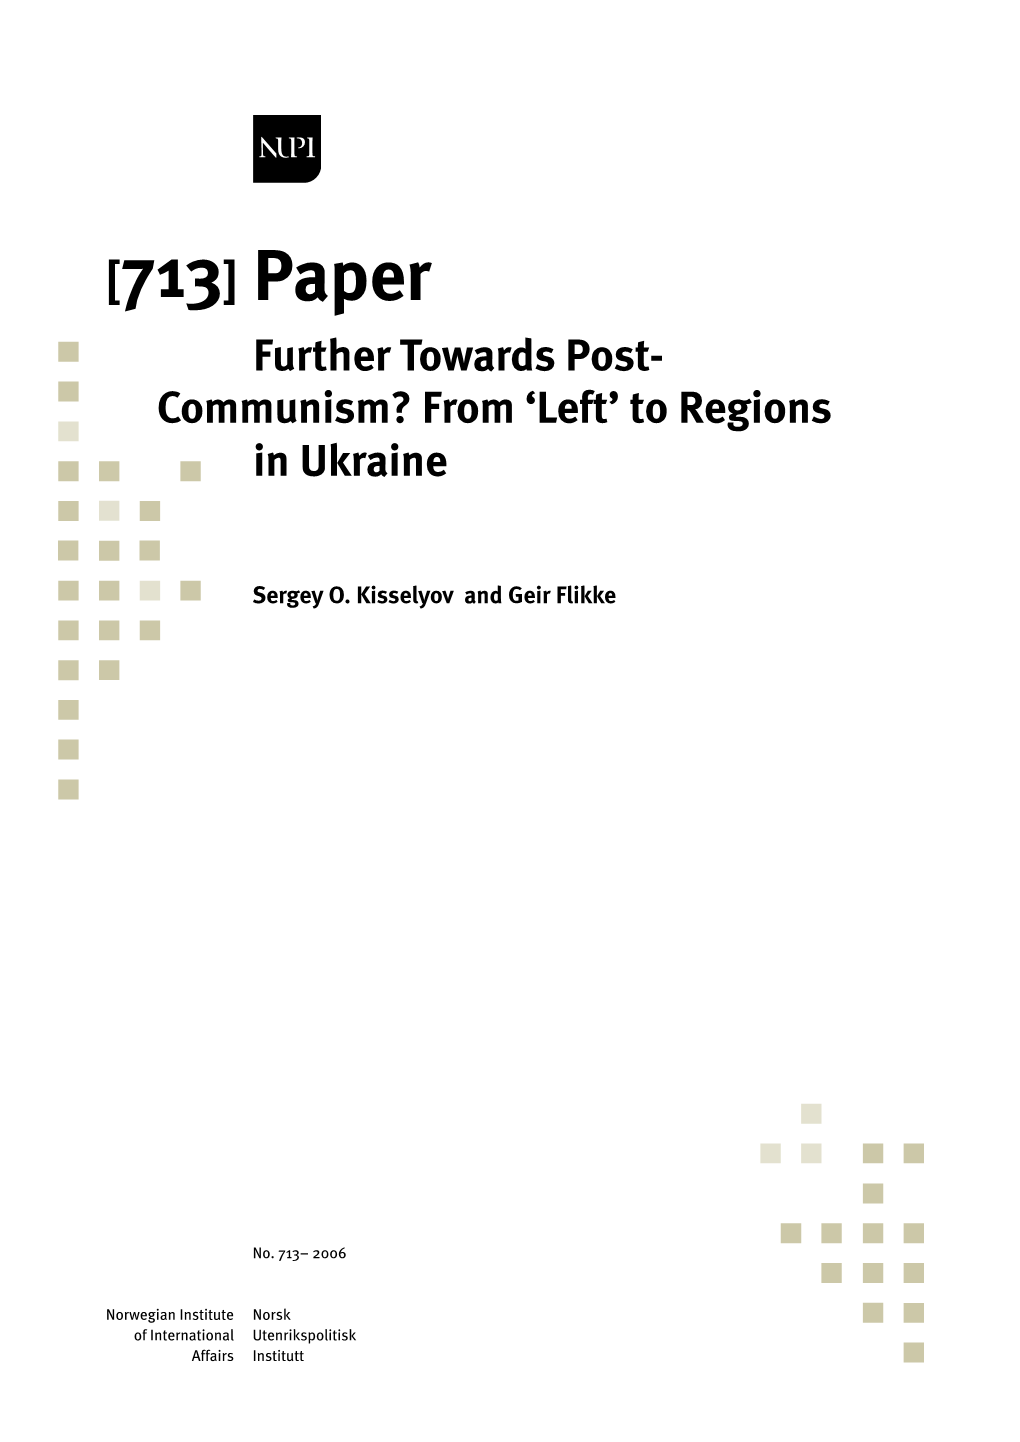 Further Towards Post-Communism? from 'Left' to Regions in Ukraine